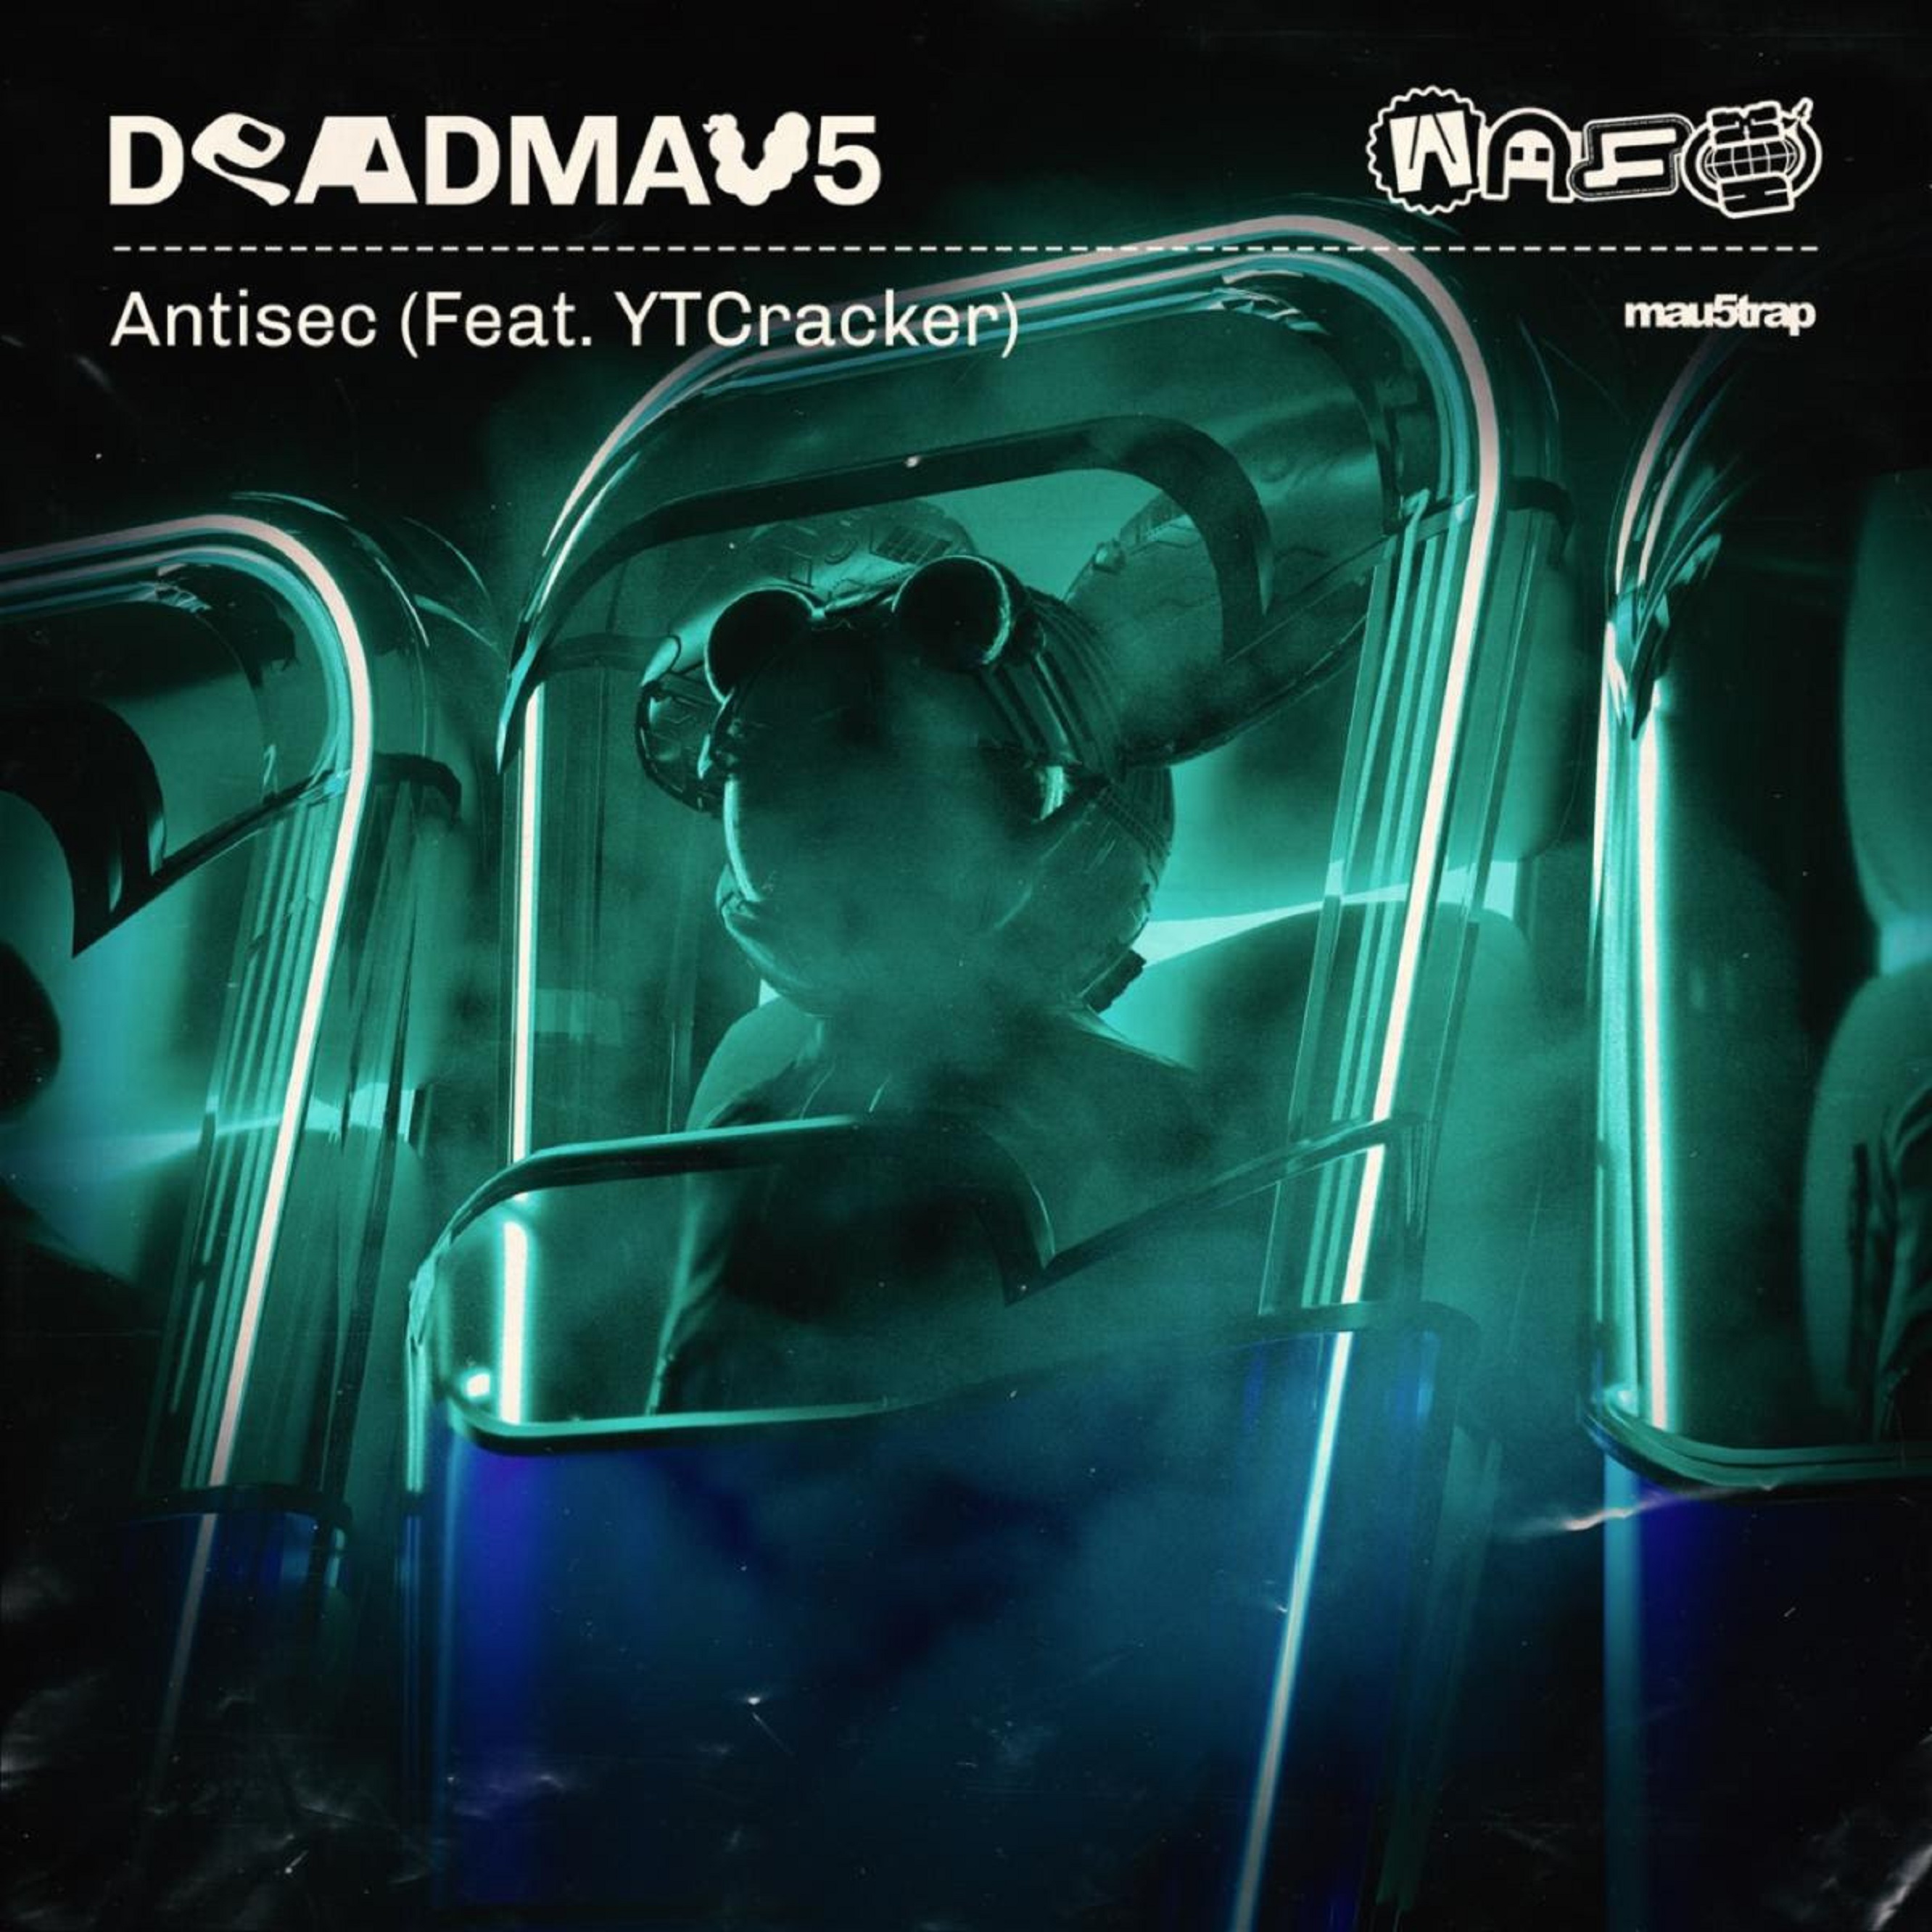 deadmau5 New Single "Antisec (feat. YTCracker)" Out Today, Jan 3